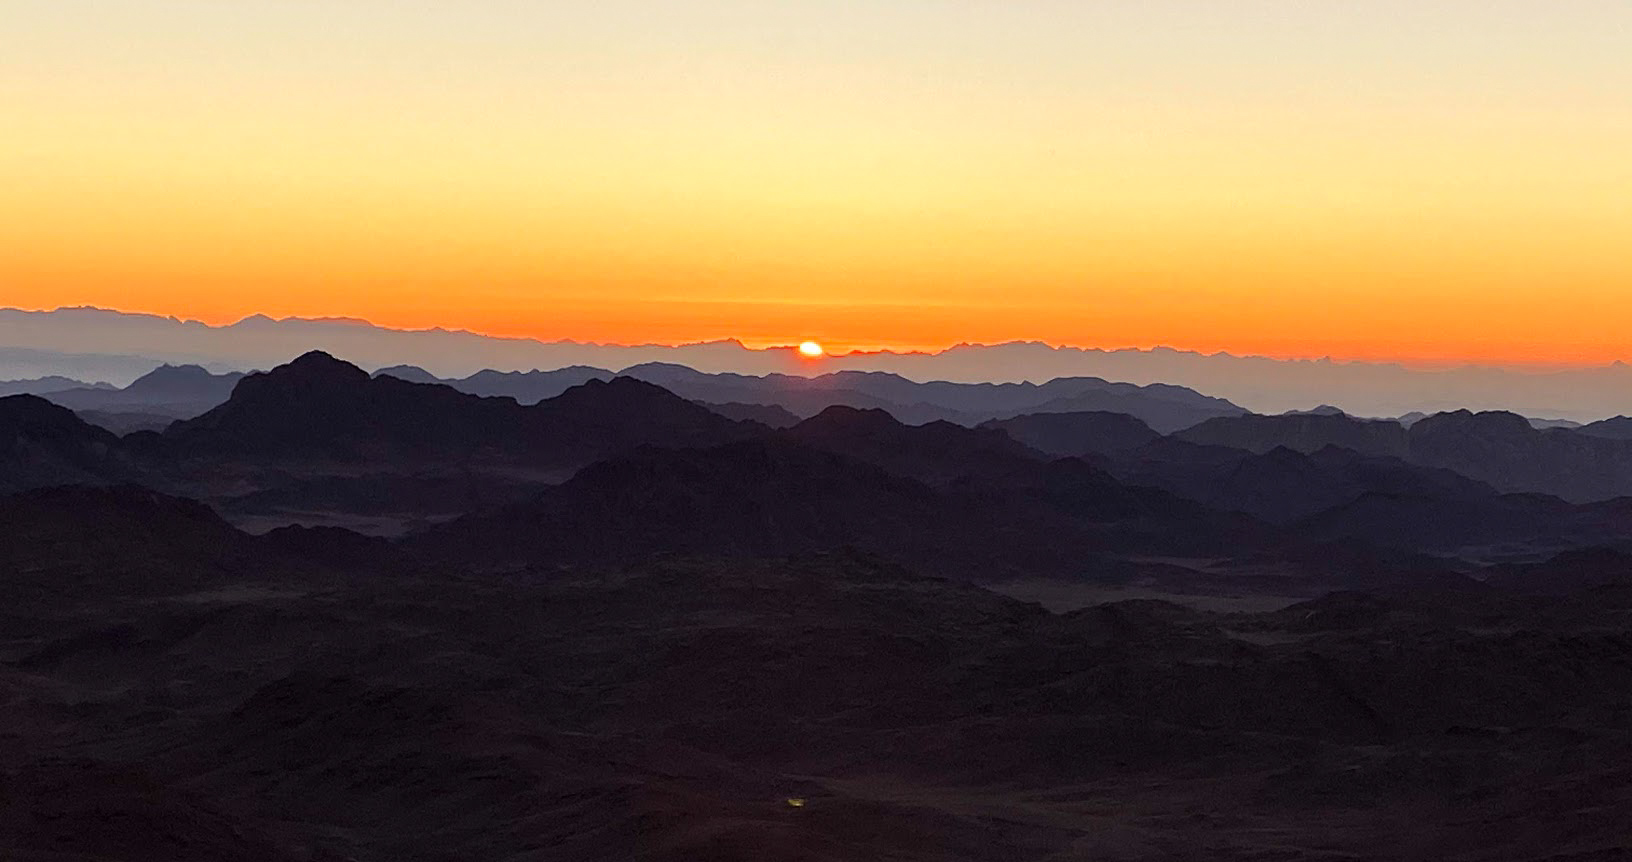 The sun rising over the silhouettes of mountains on Mount Sinai, Egypt